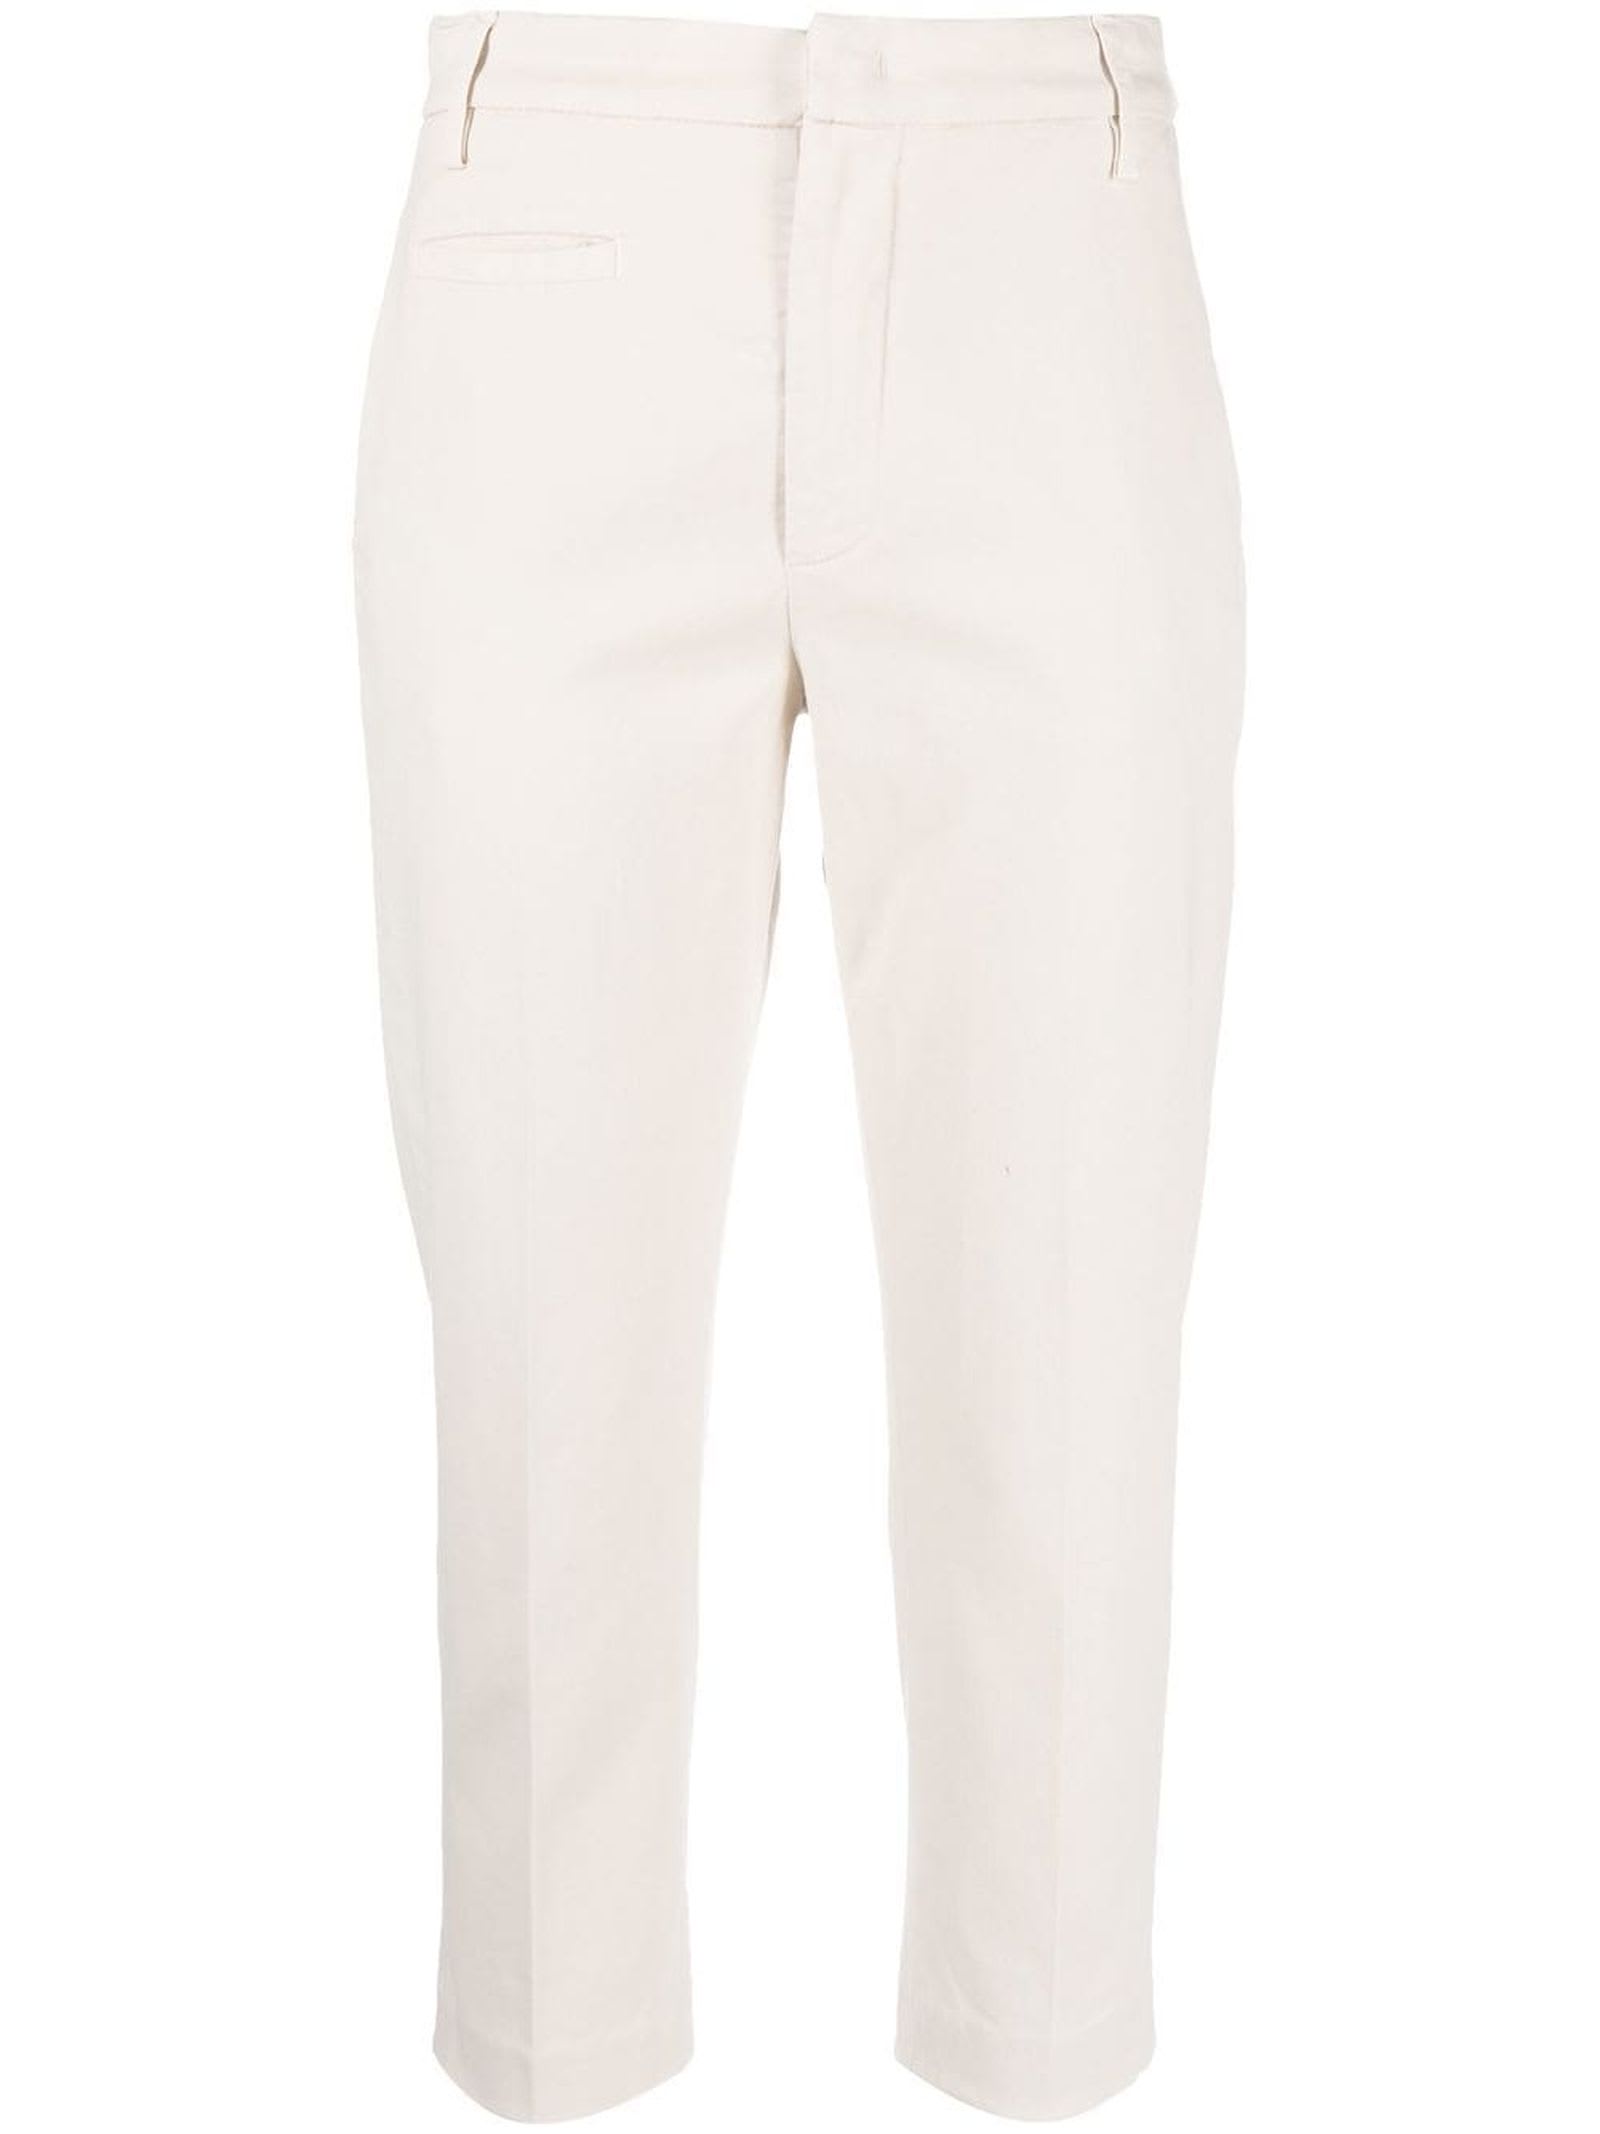 Dondup Light Beige Cotton-lyocell Blend Trousers